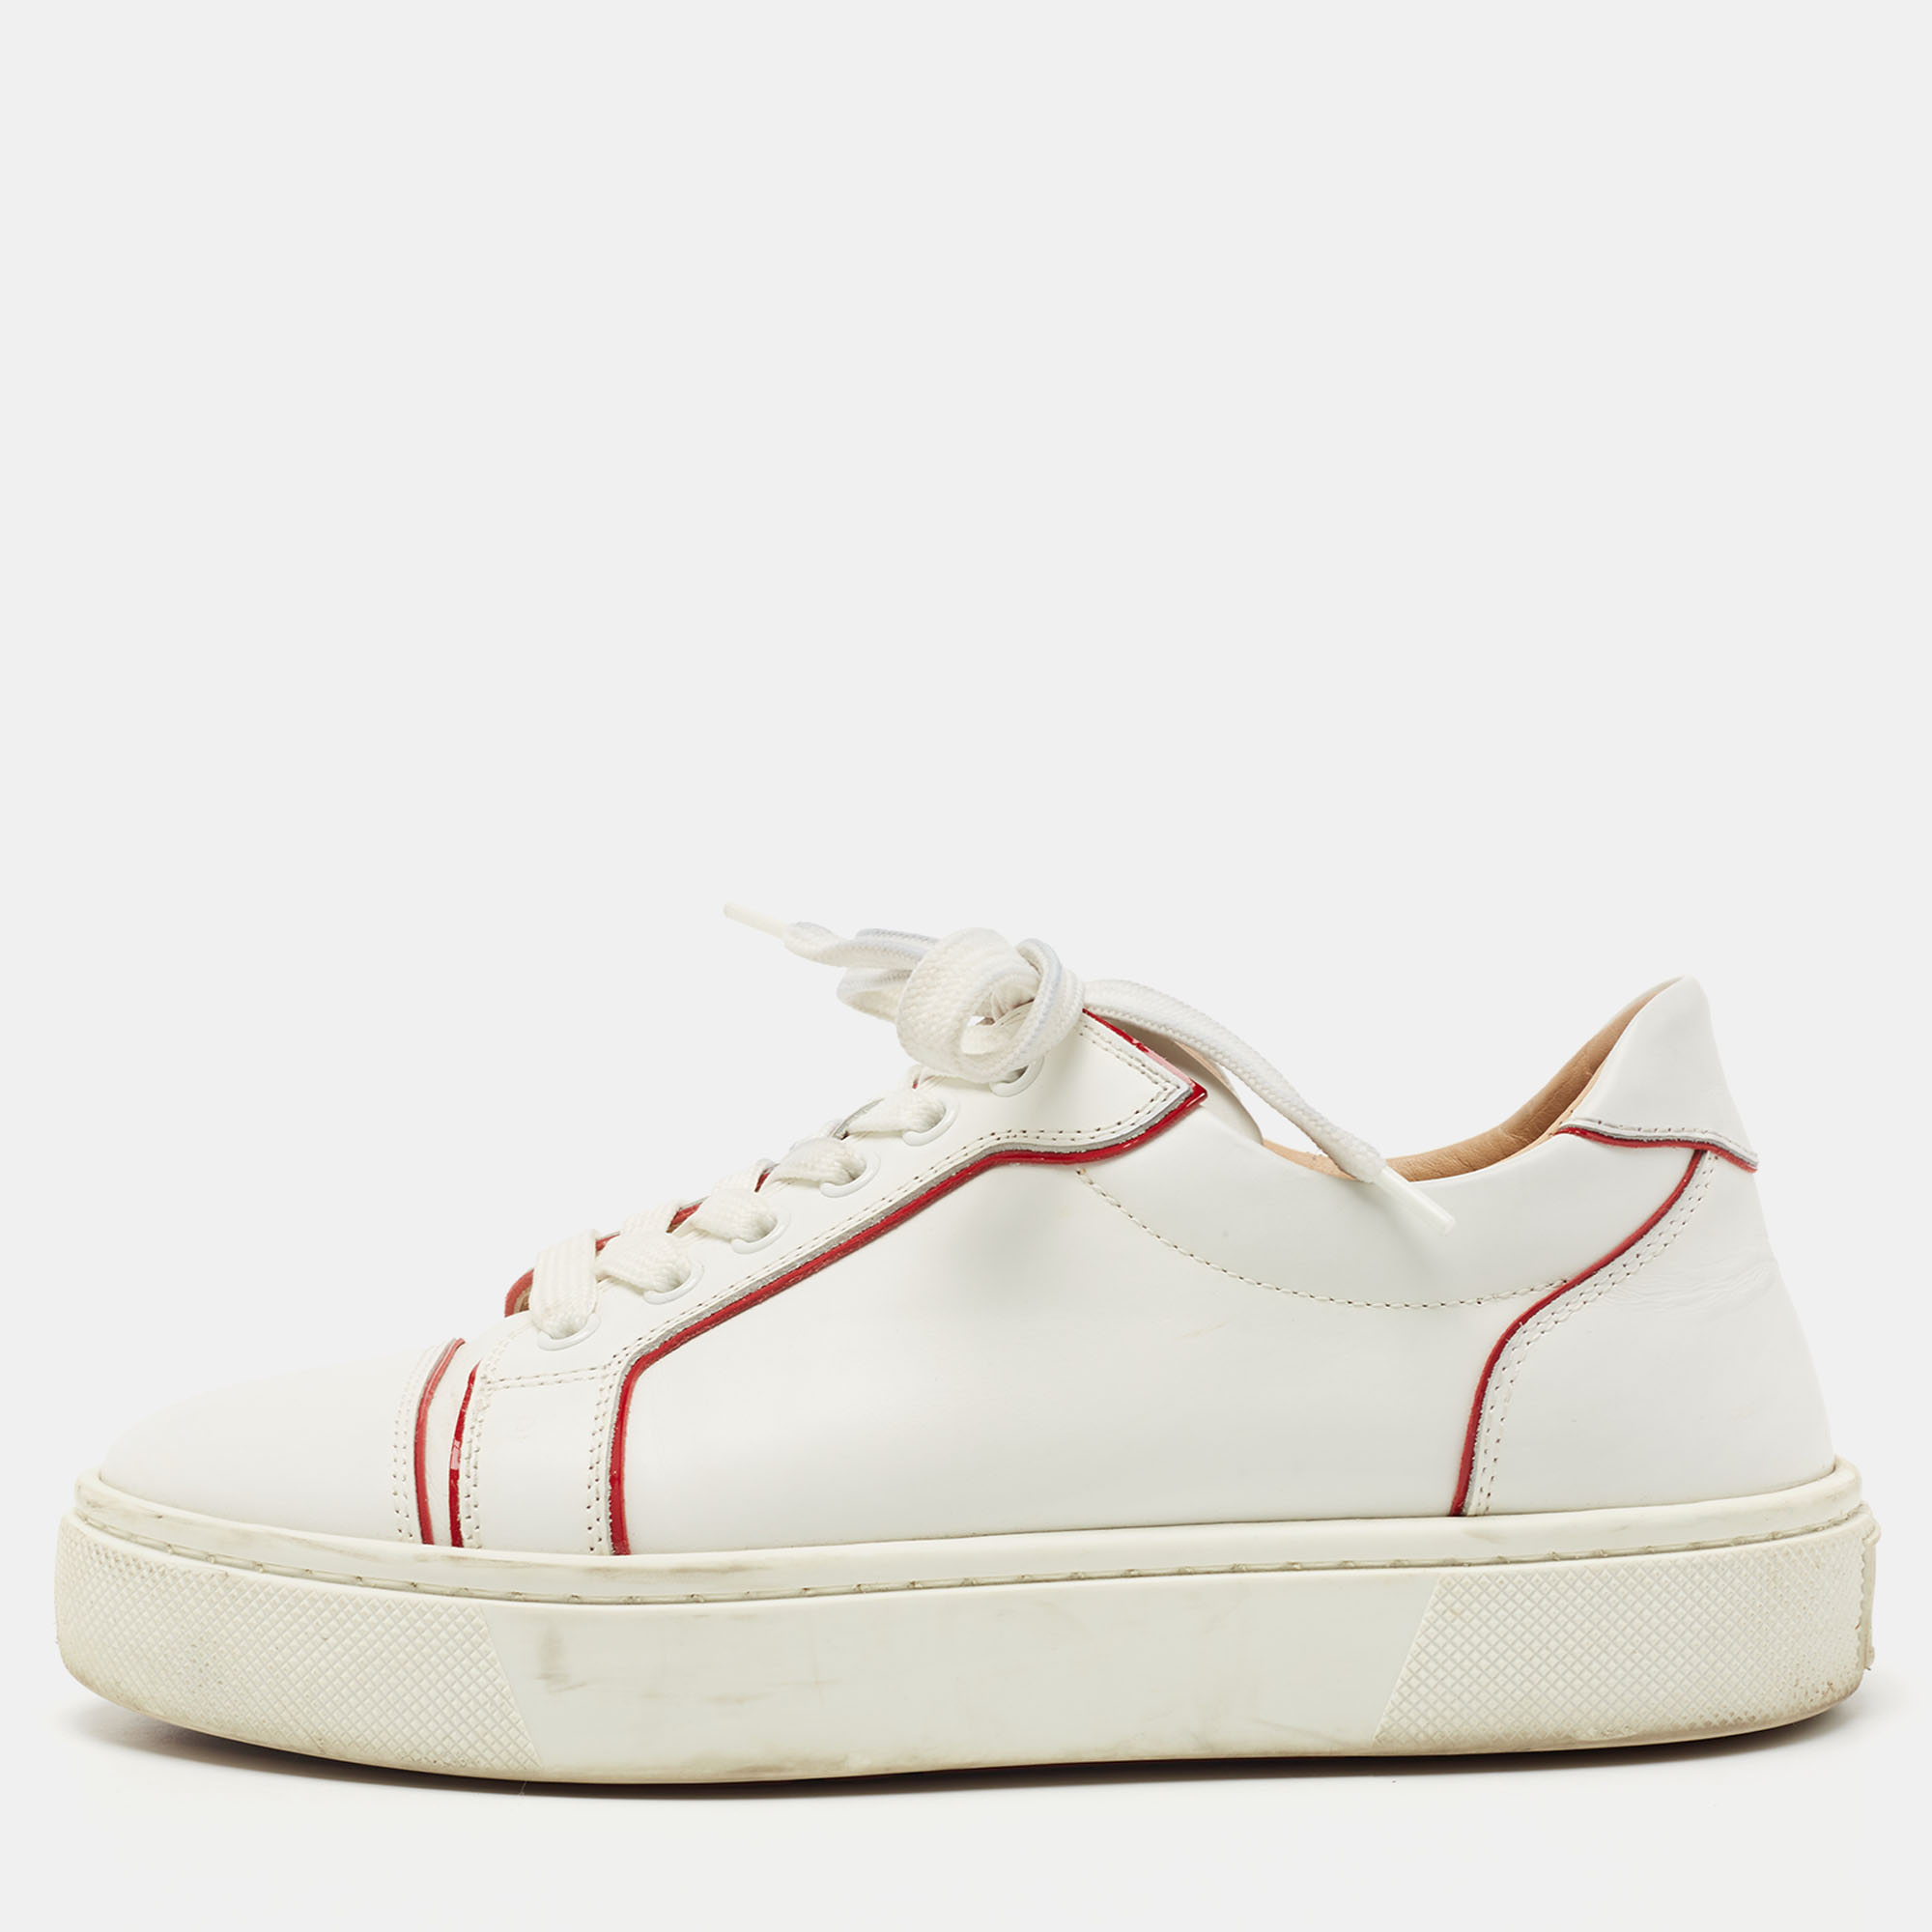 CHRISTIAN LOUBOUTIN Pre-owned White/red Leather Vieira Orlato Sneakers Size 37.5